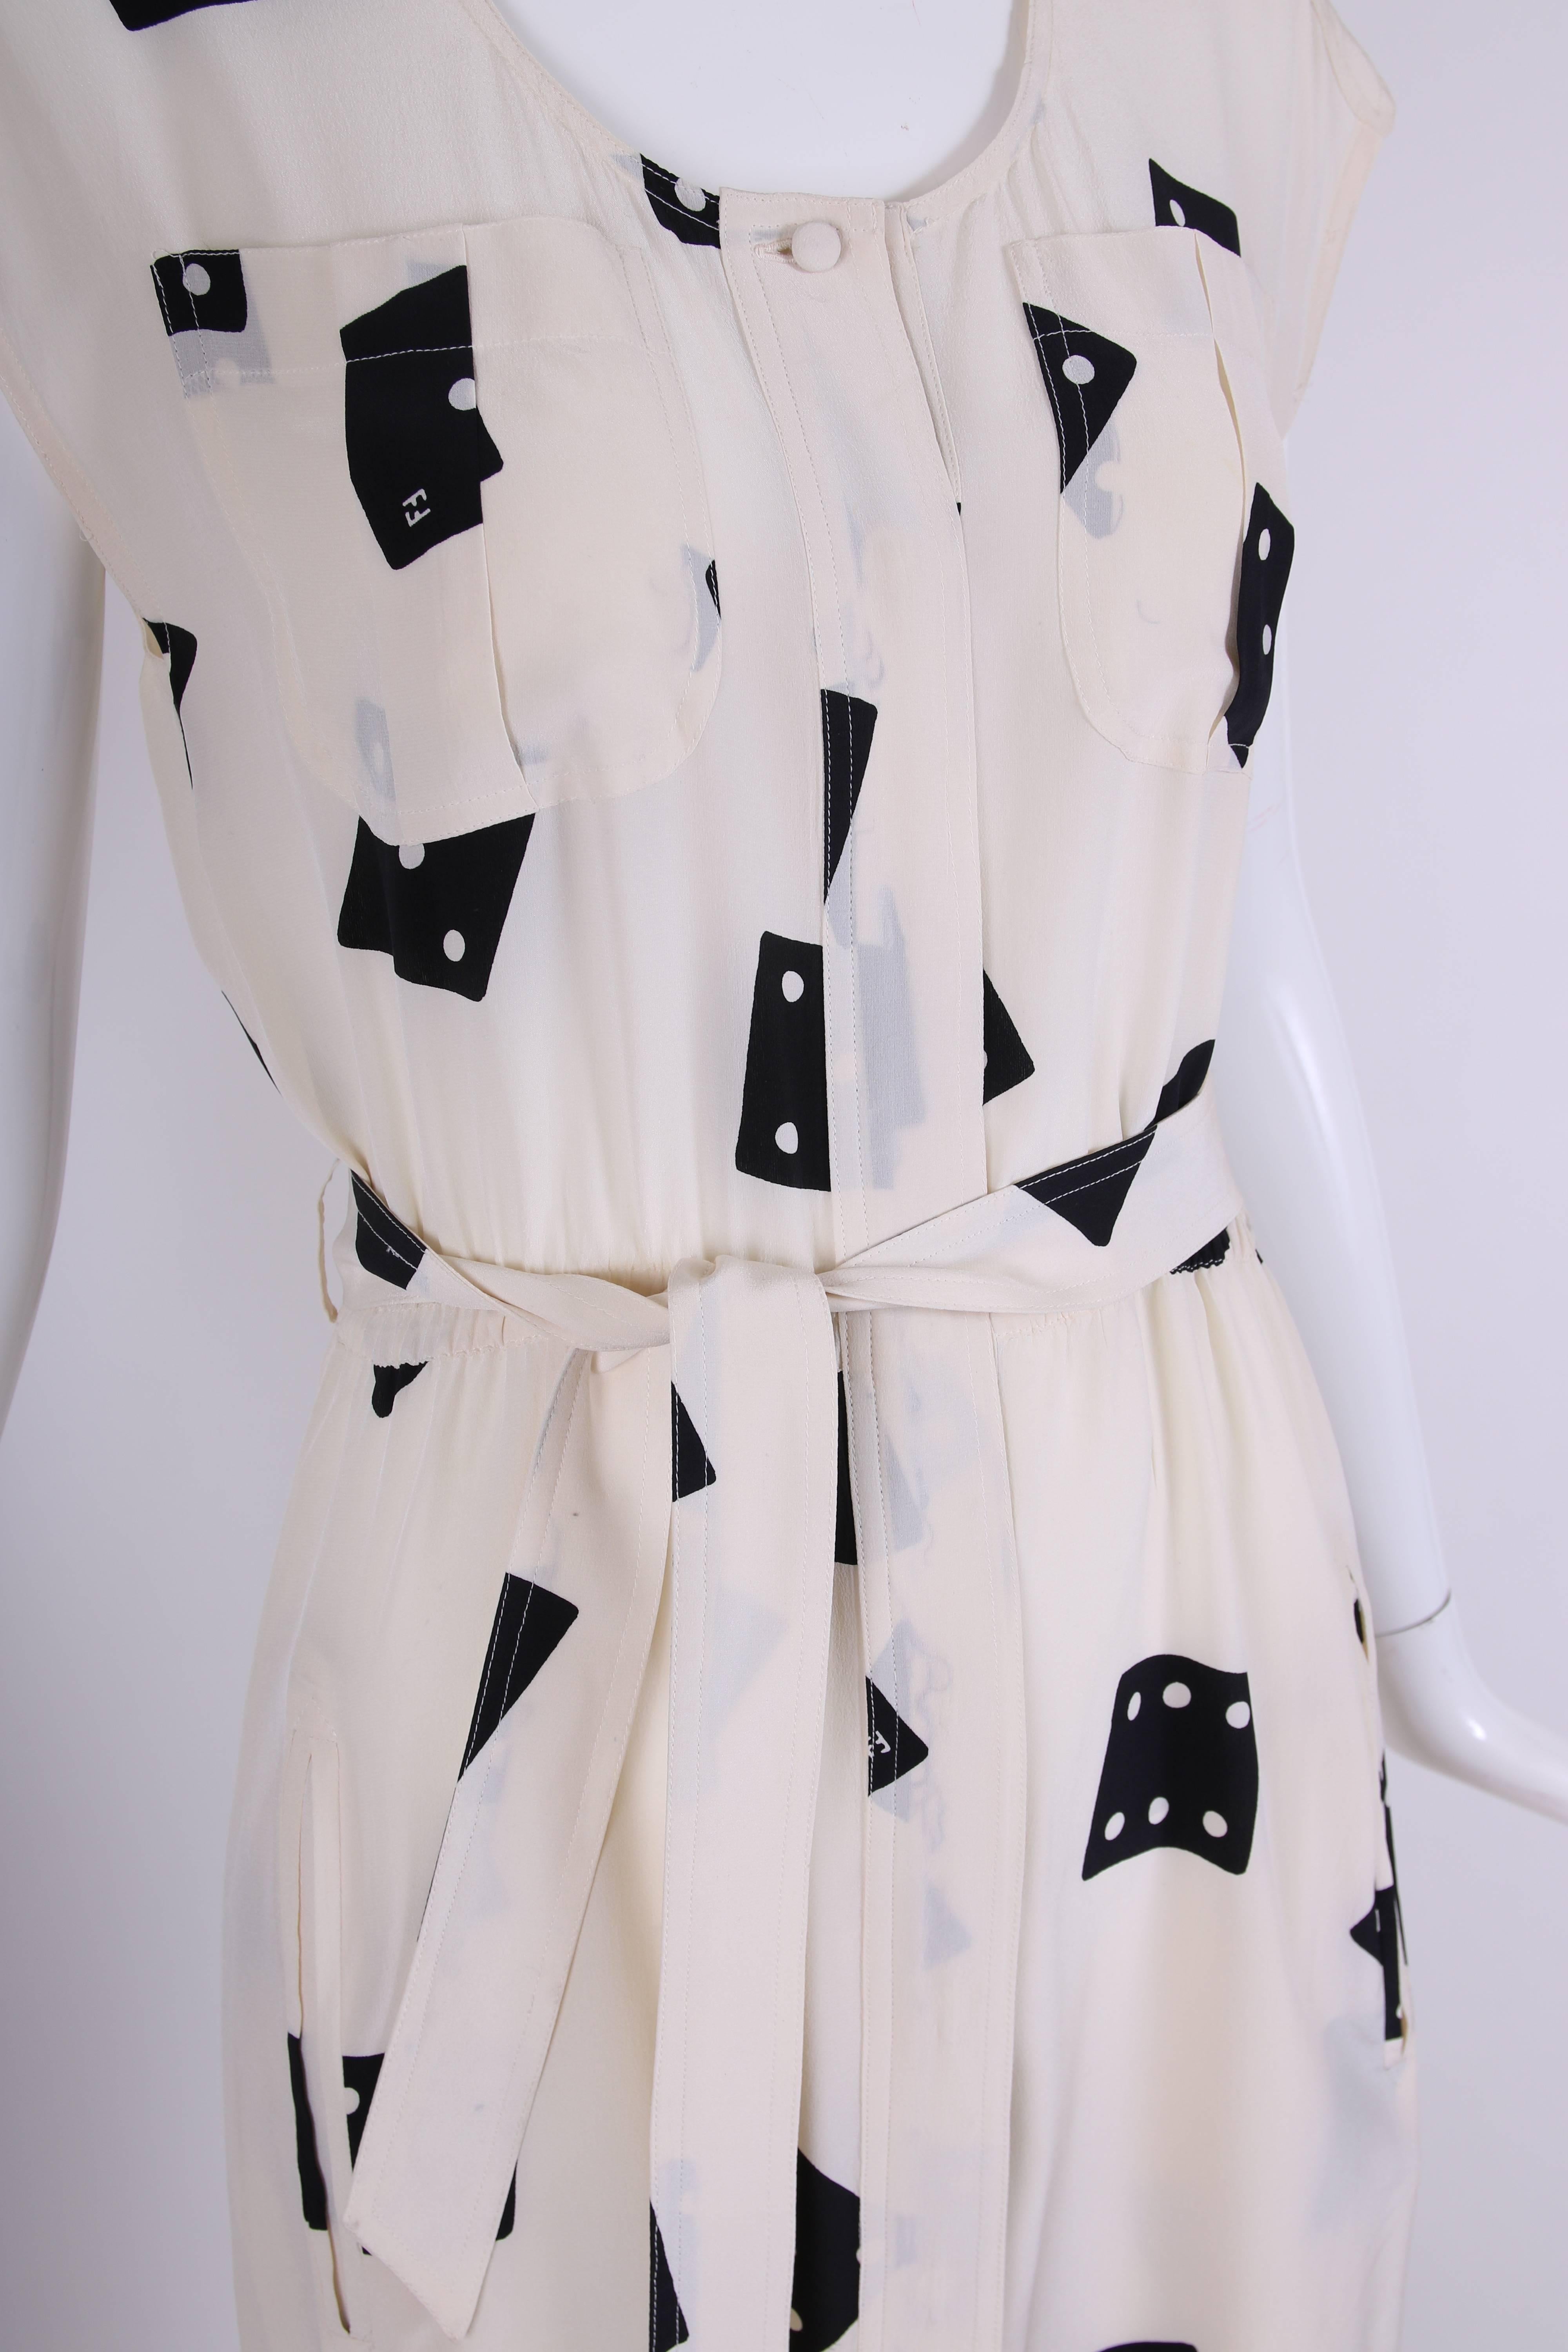 Gray Fendi Vintage White Silk Sleeveless Day Dress with Black Dice Print and Belt